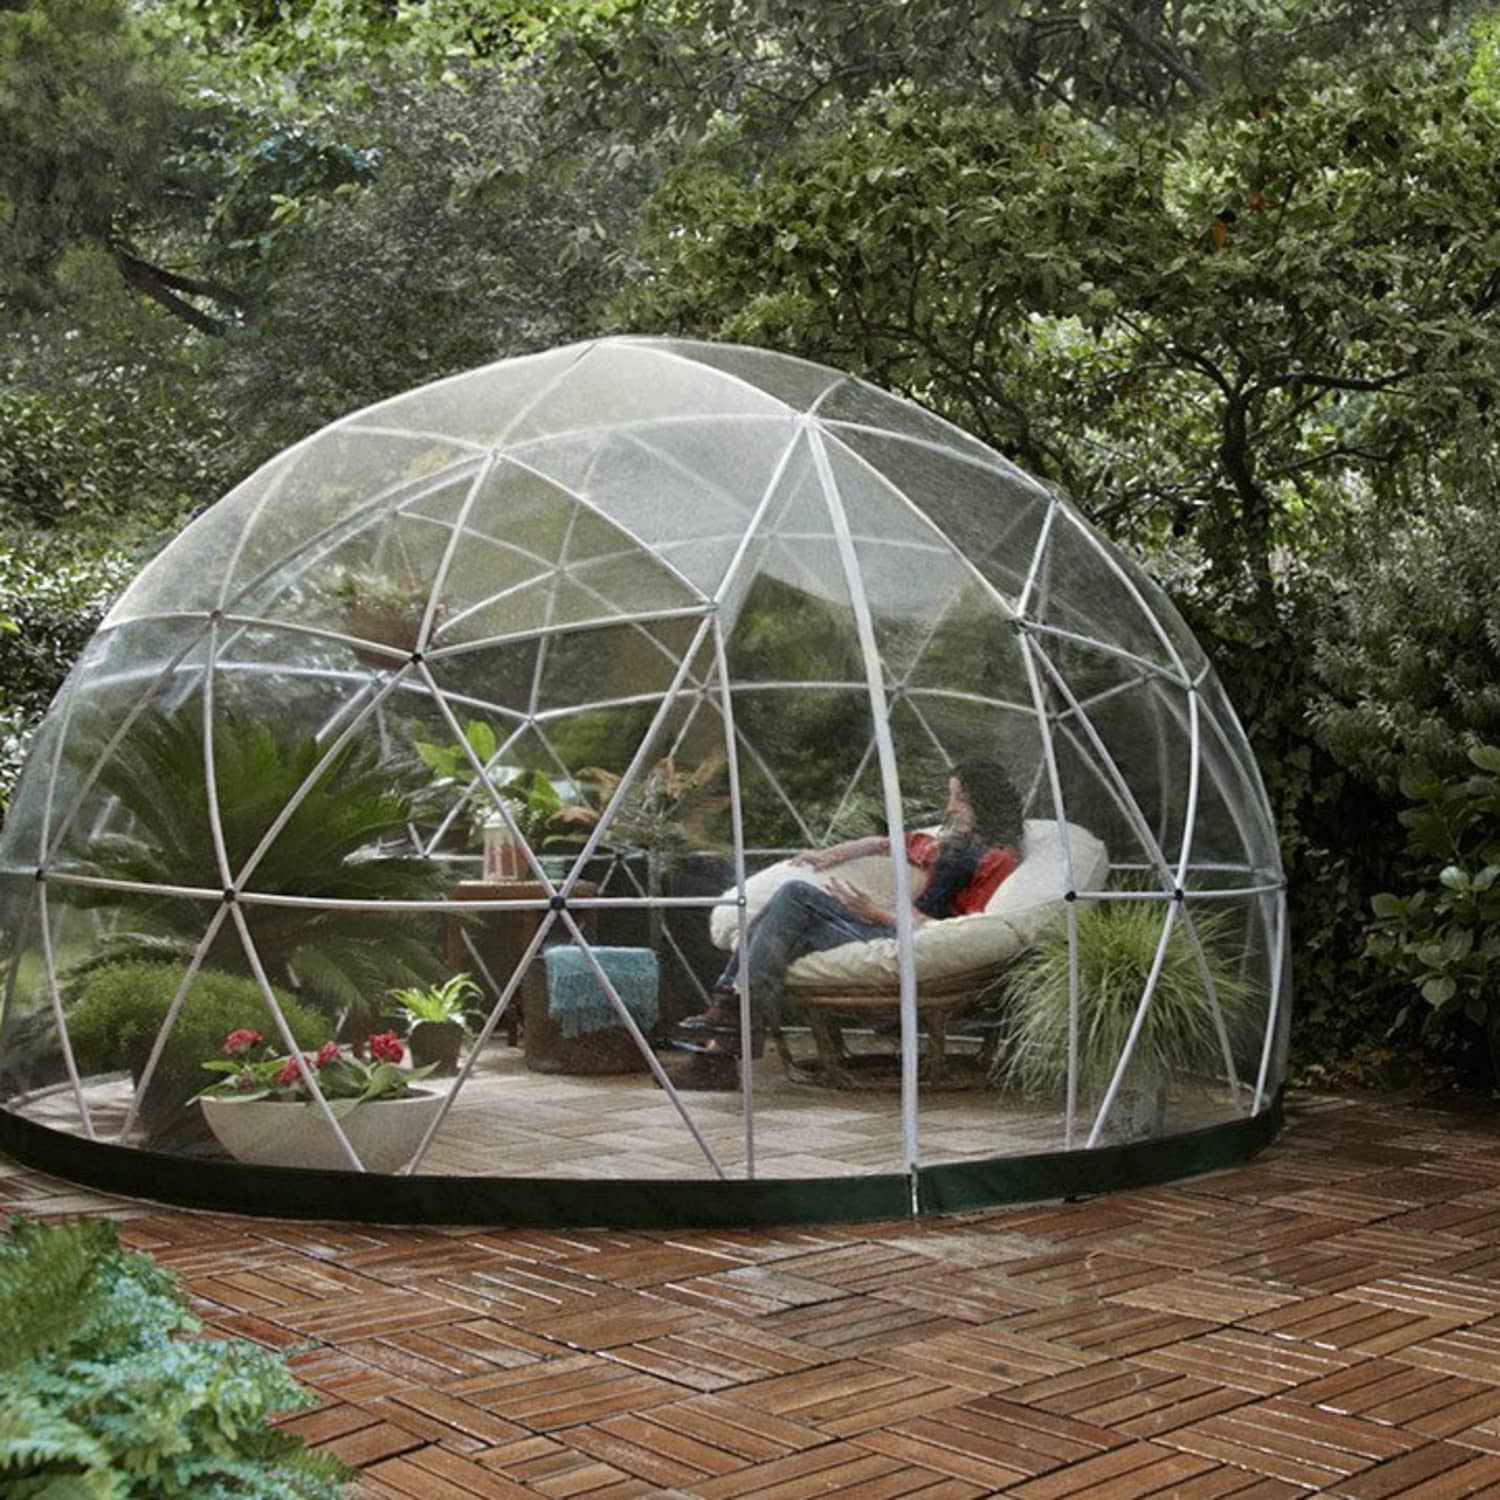 Is Selling a Backyard Garden Dome Igloo